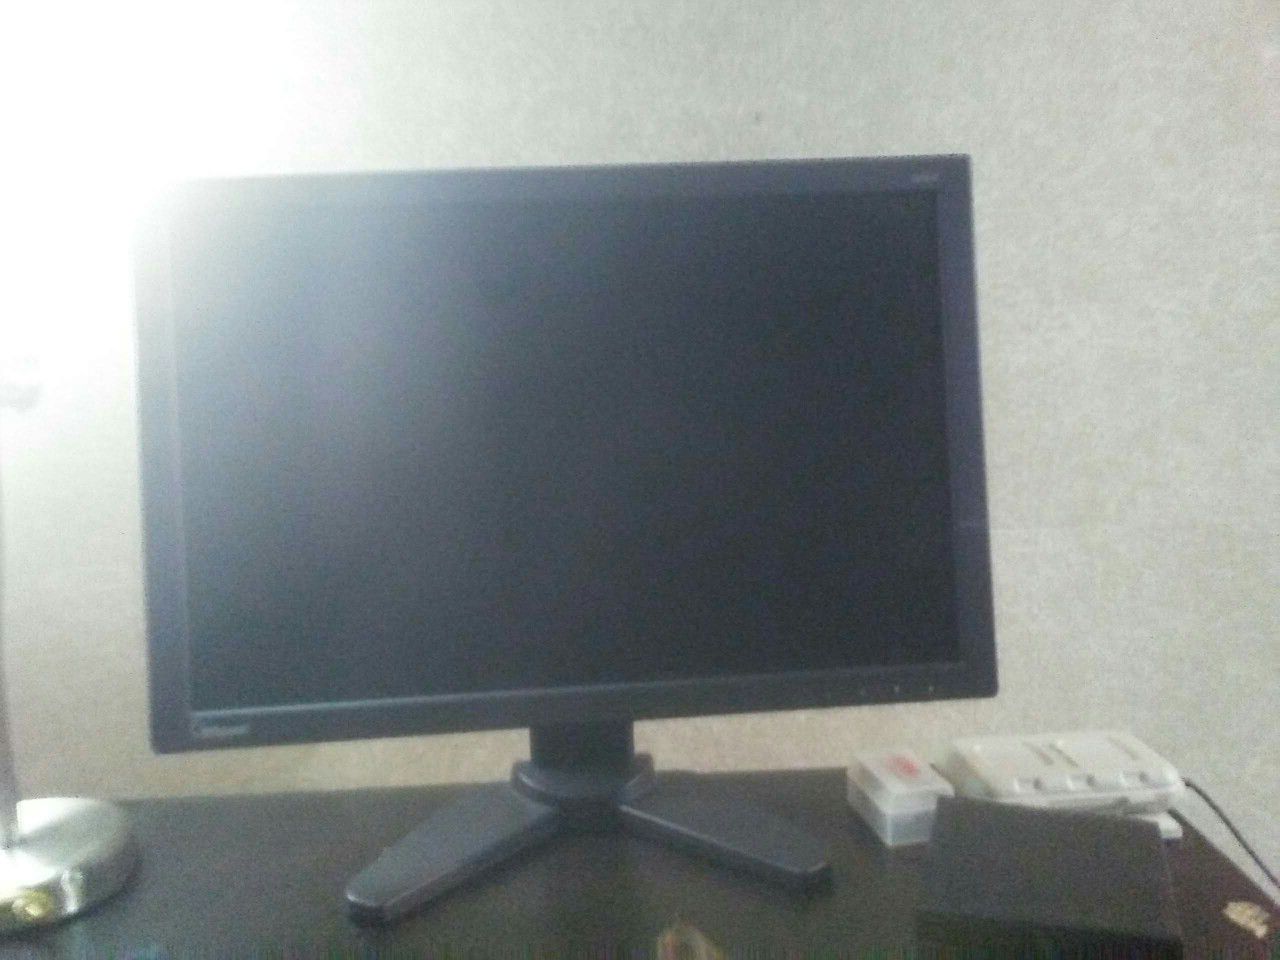 Viewsonic Optiquest Q20wb 20" 1080HD flat screen computer monitor